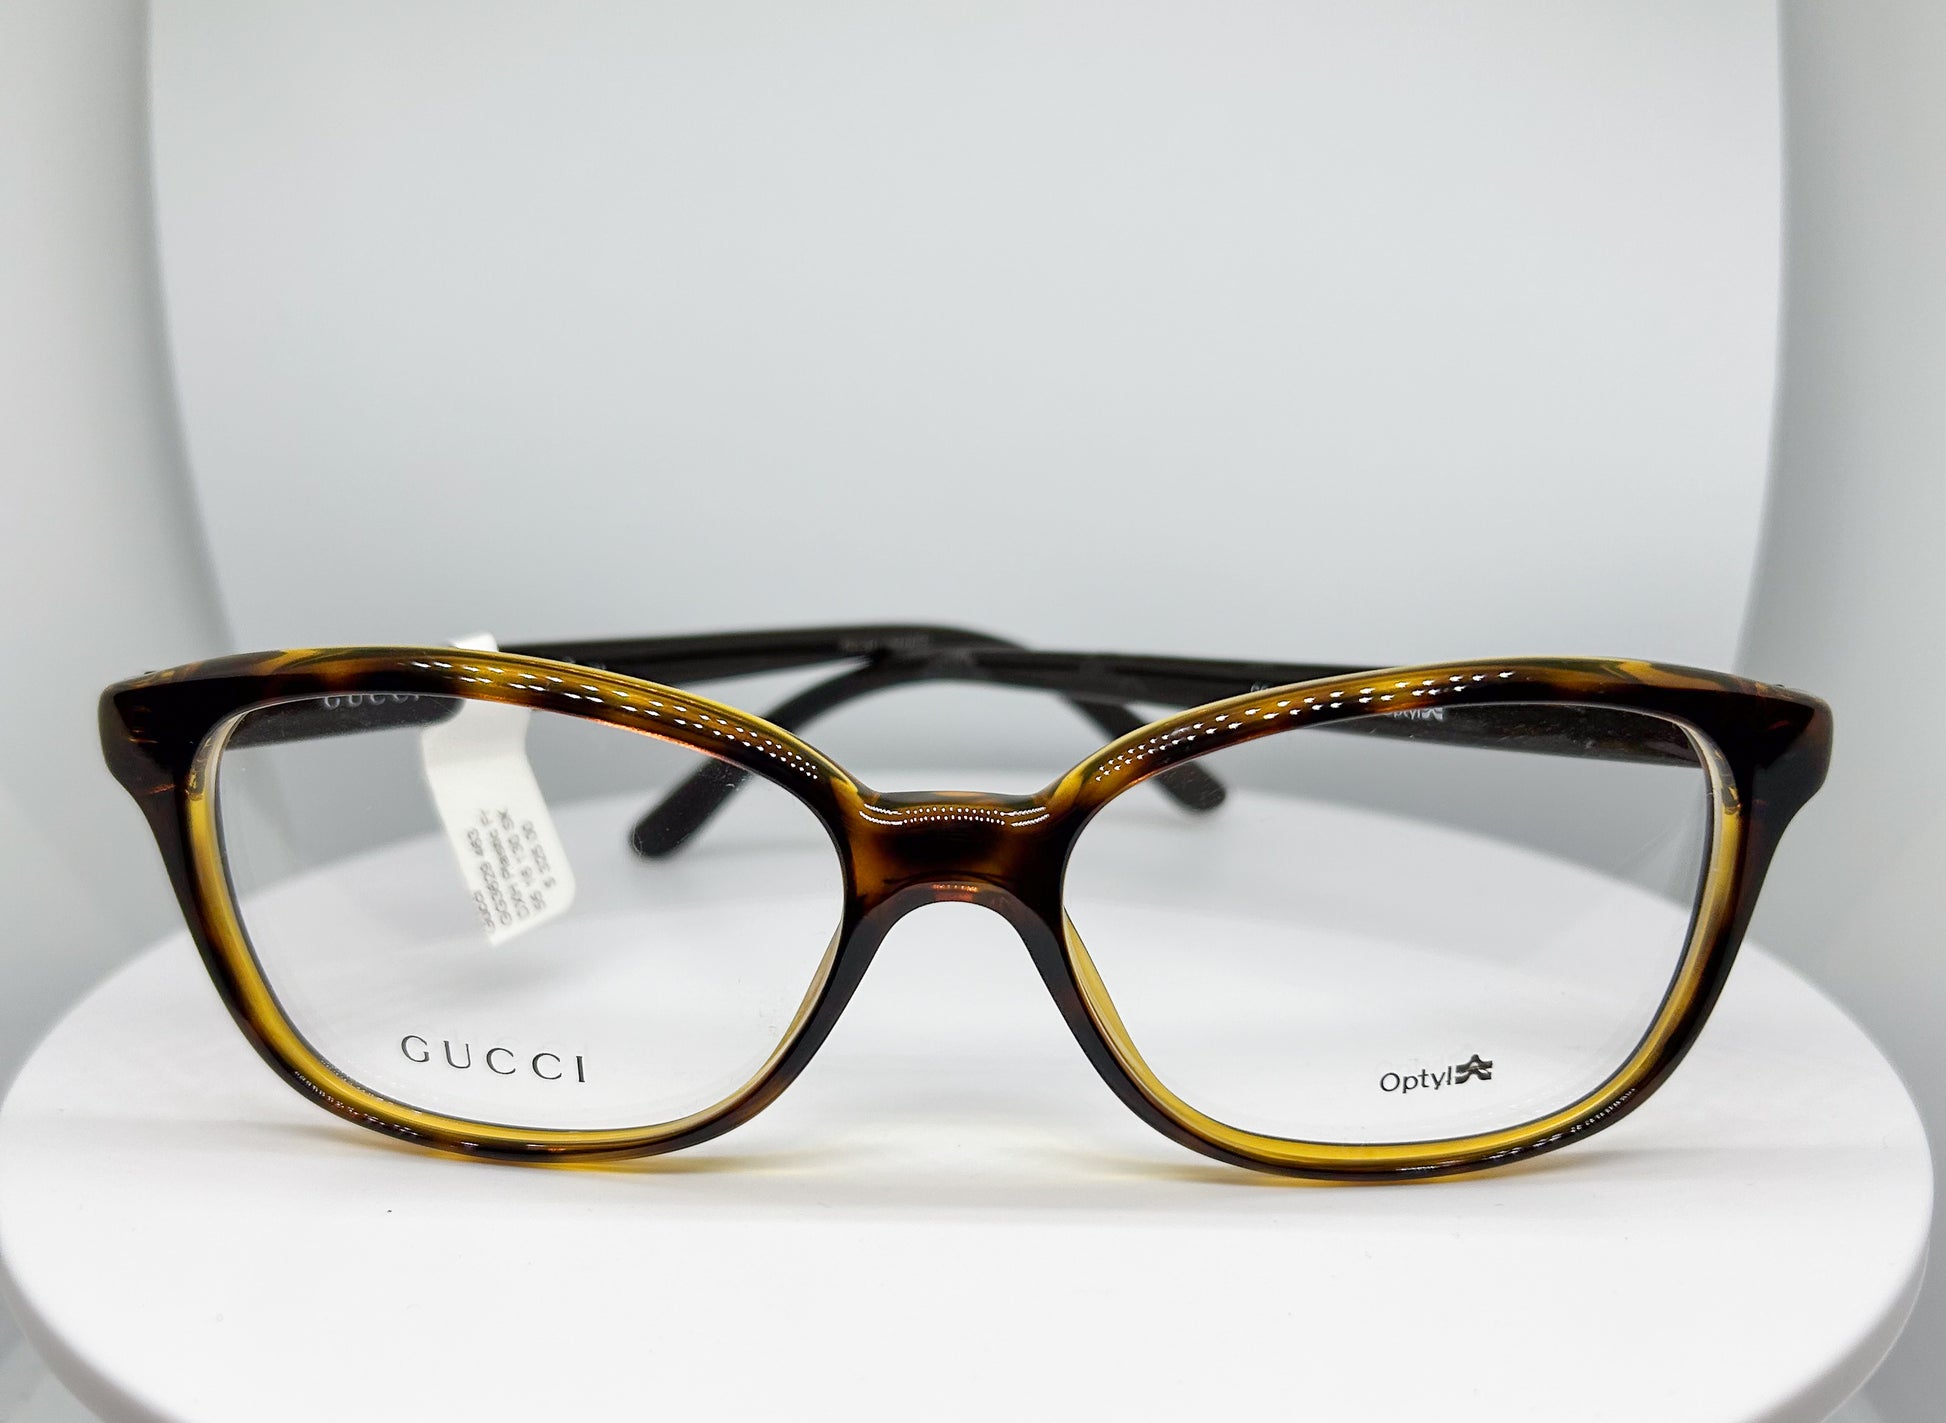 Gucci GG3629 Women Optical  Frame Optical  Eyewear from Adair Eyewear - Over 40 years of customer service excellence